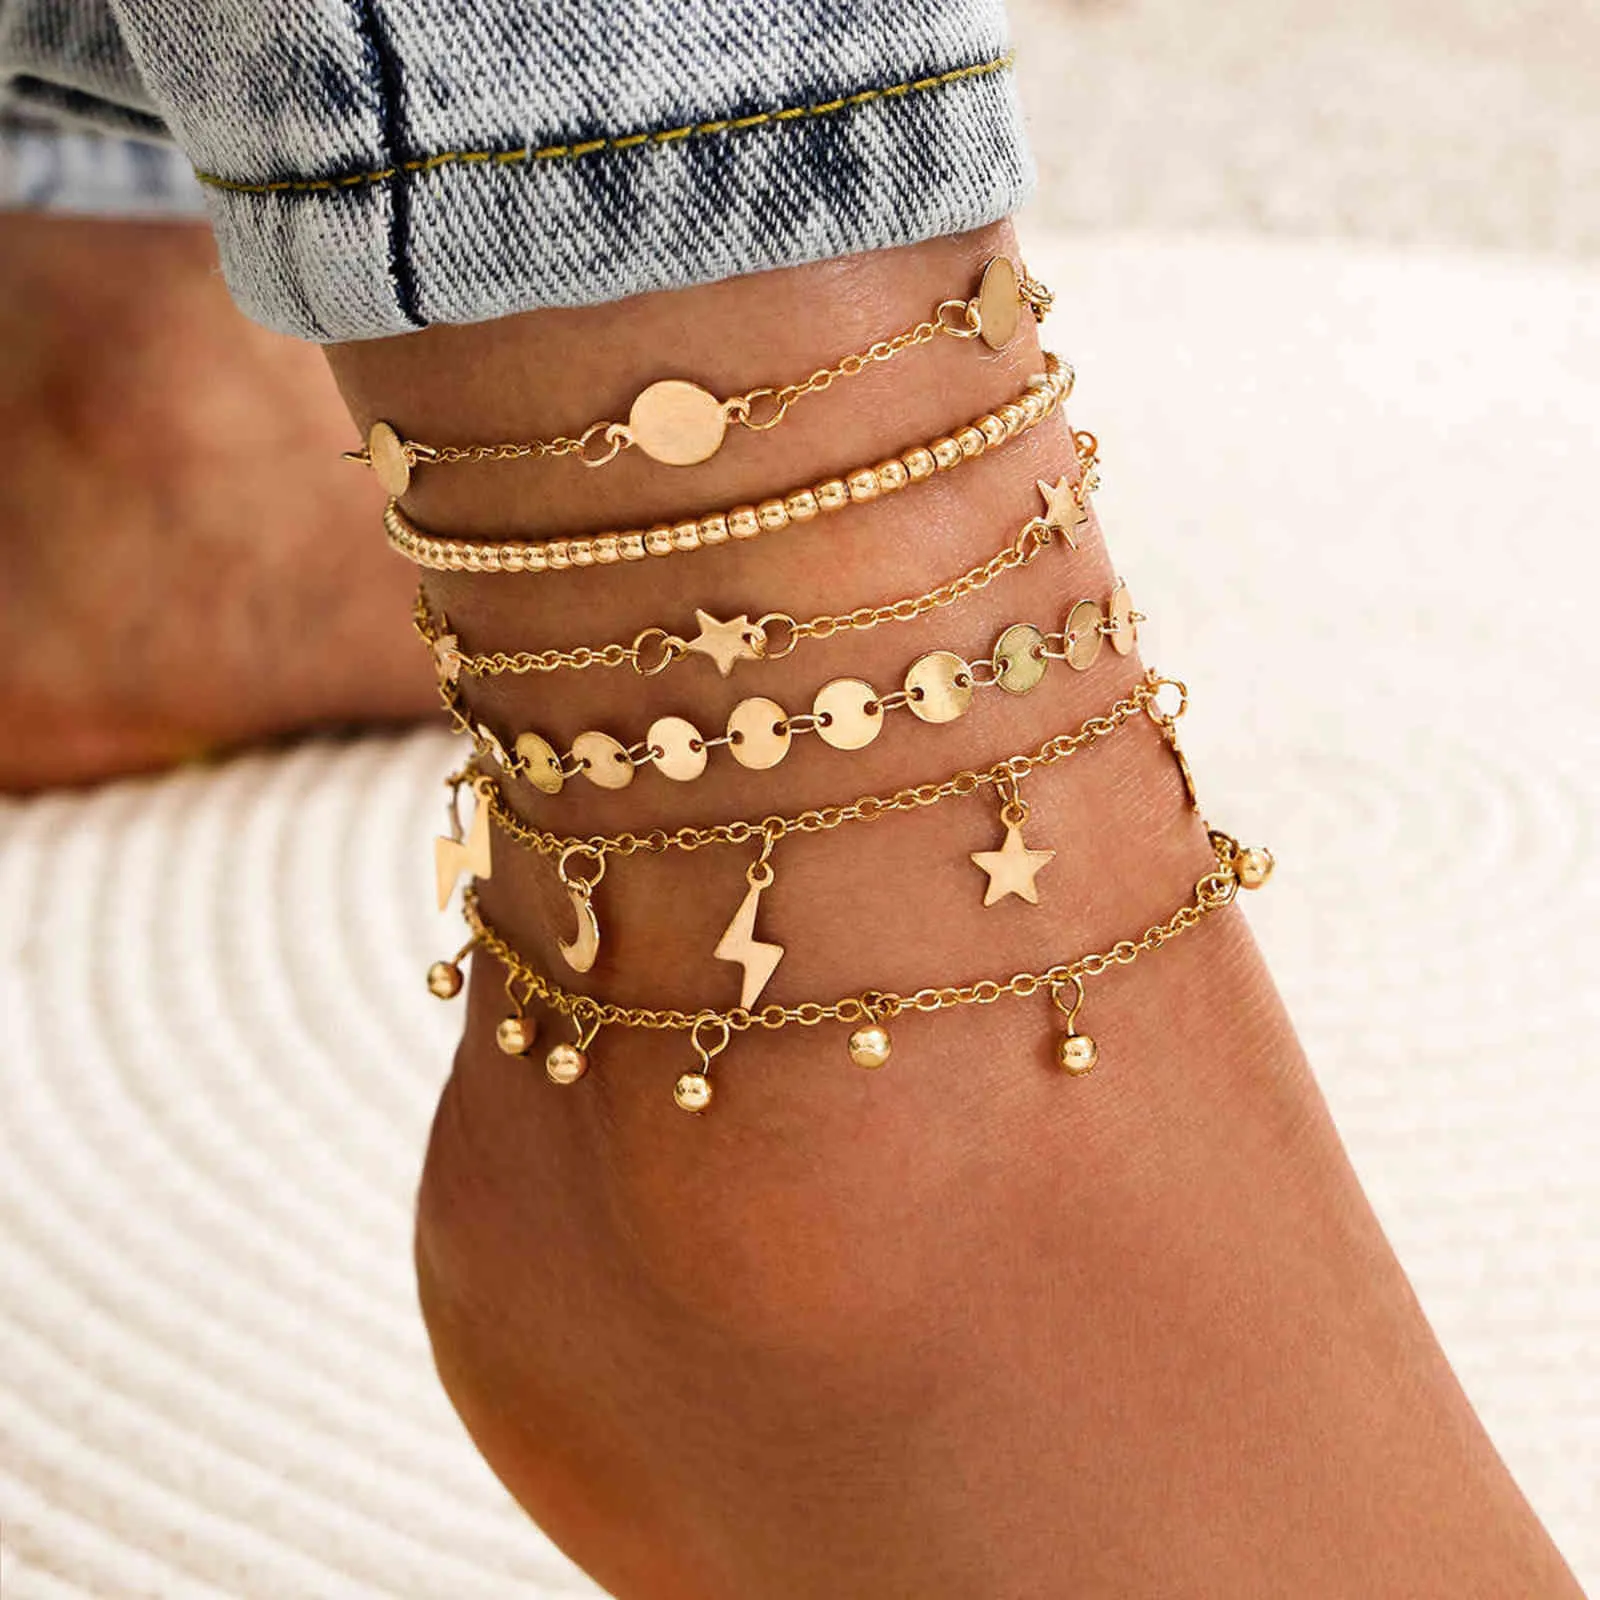 Beautiful Mosaic Butterfly Anklet Ankle Bracelet Fashion Hut Jewelry